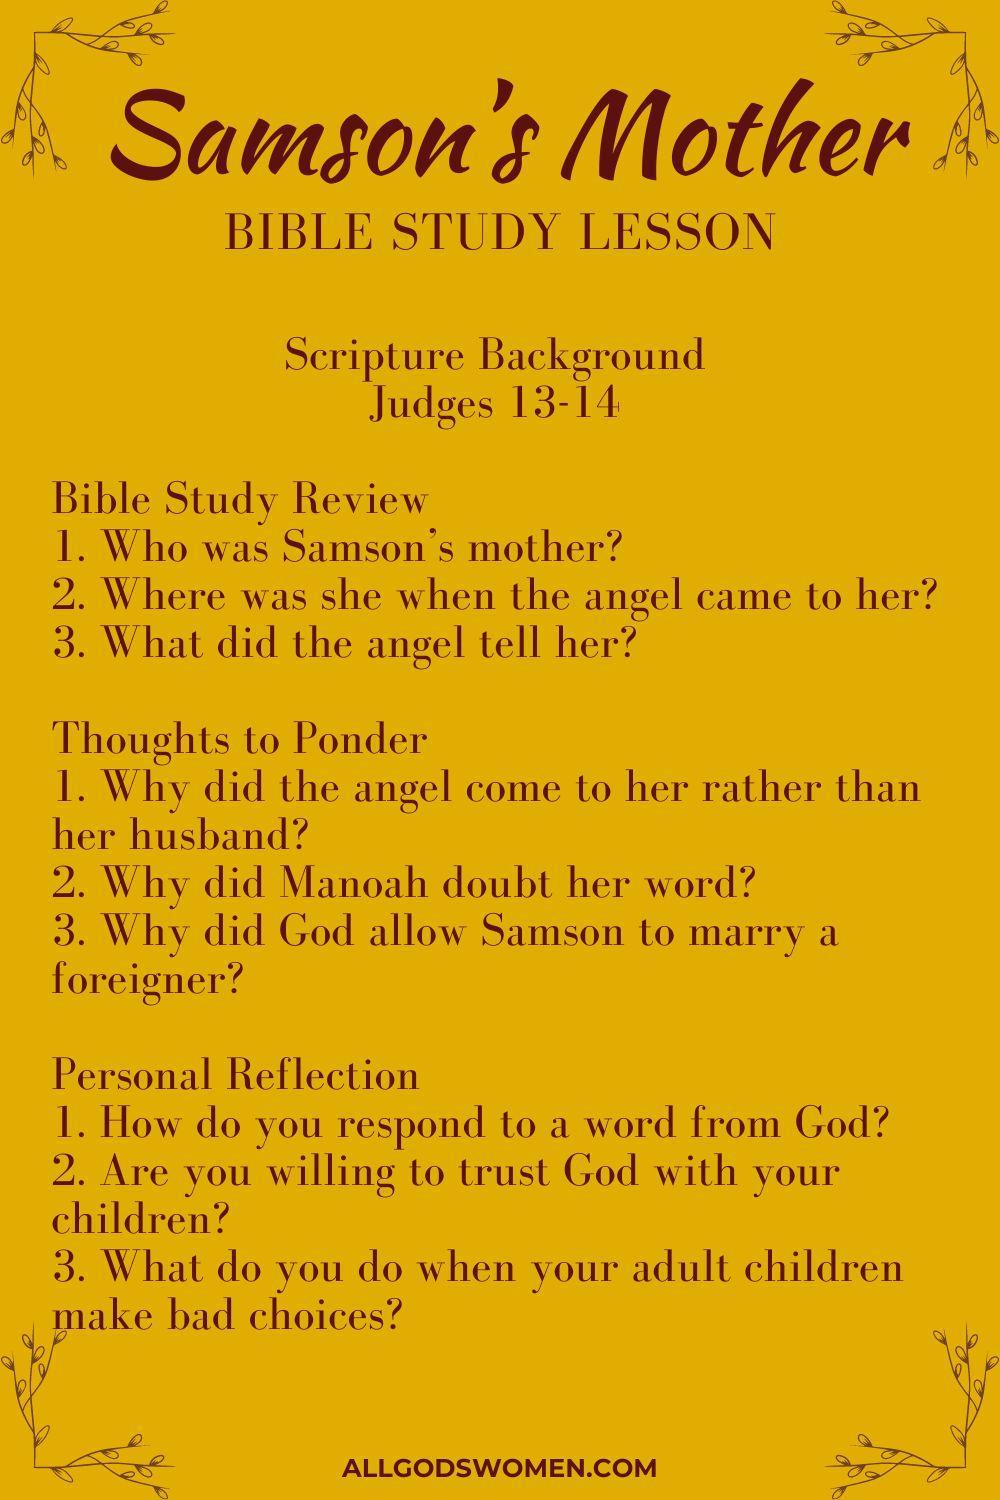 Samson's Mother Bible study lesson